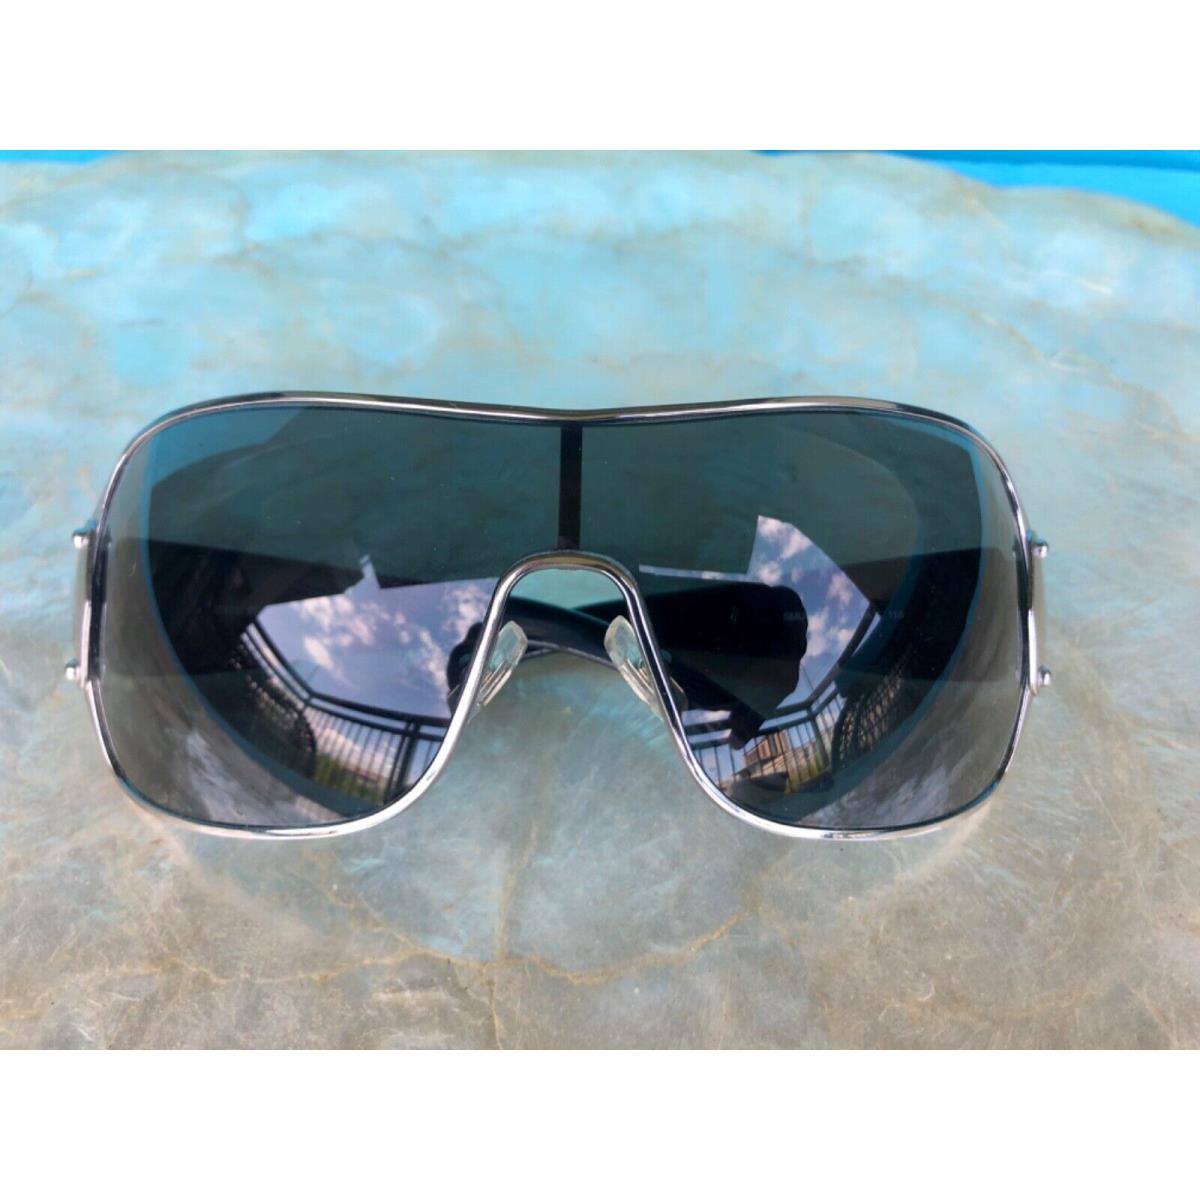 Miu Miu sunglasses  - SILVER with BLACK ARMS Frame 5